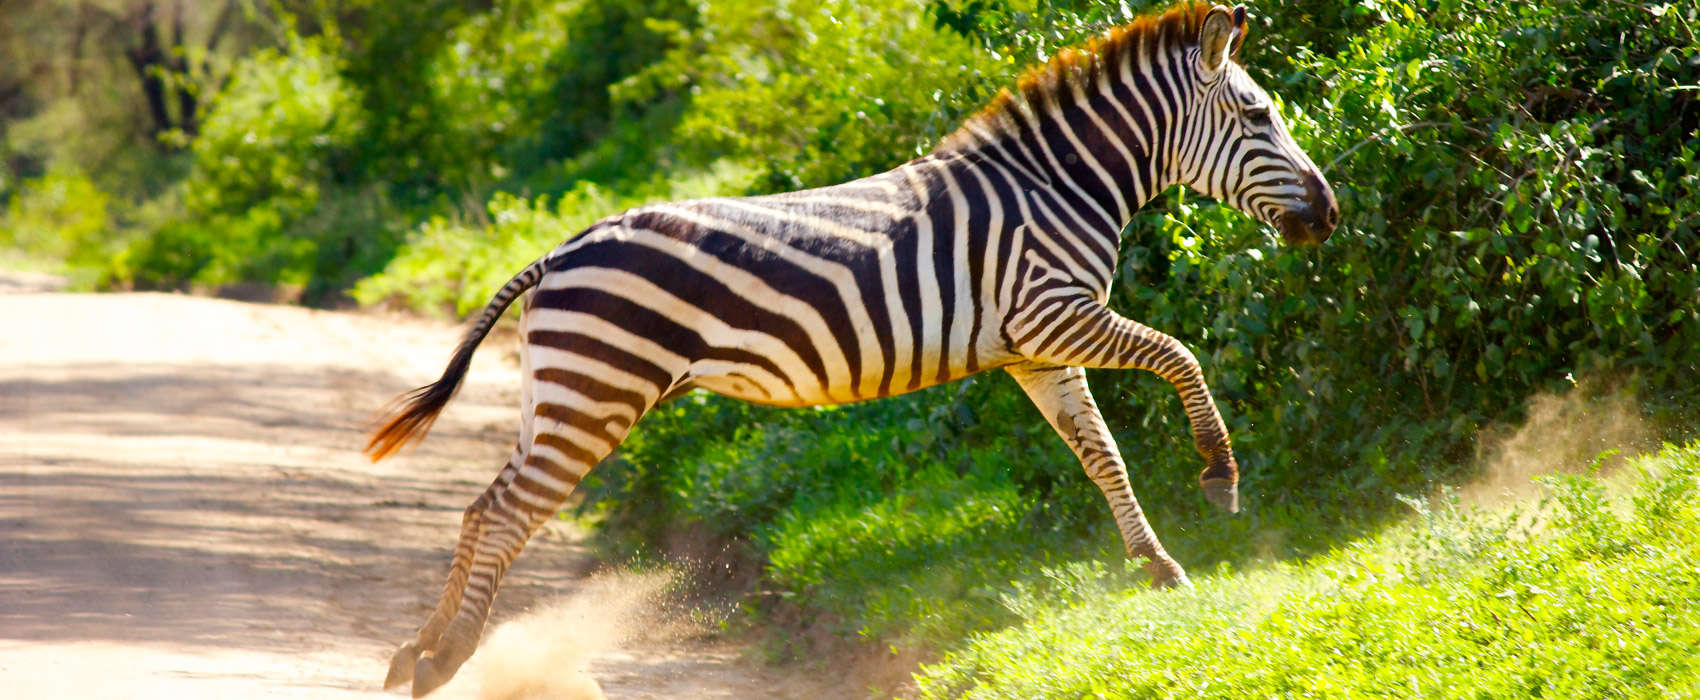 African Lake Manyara National Park Safari zebra